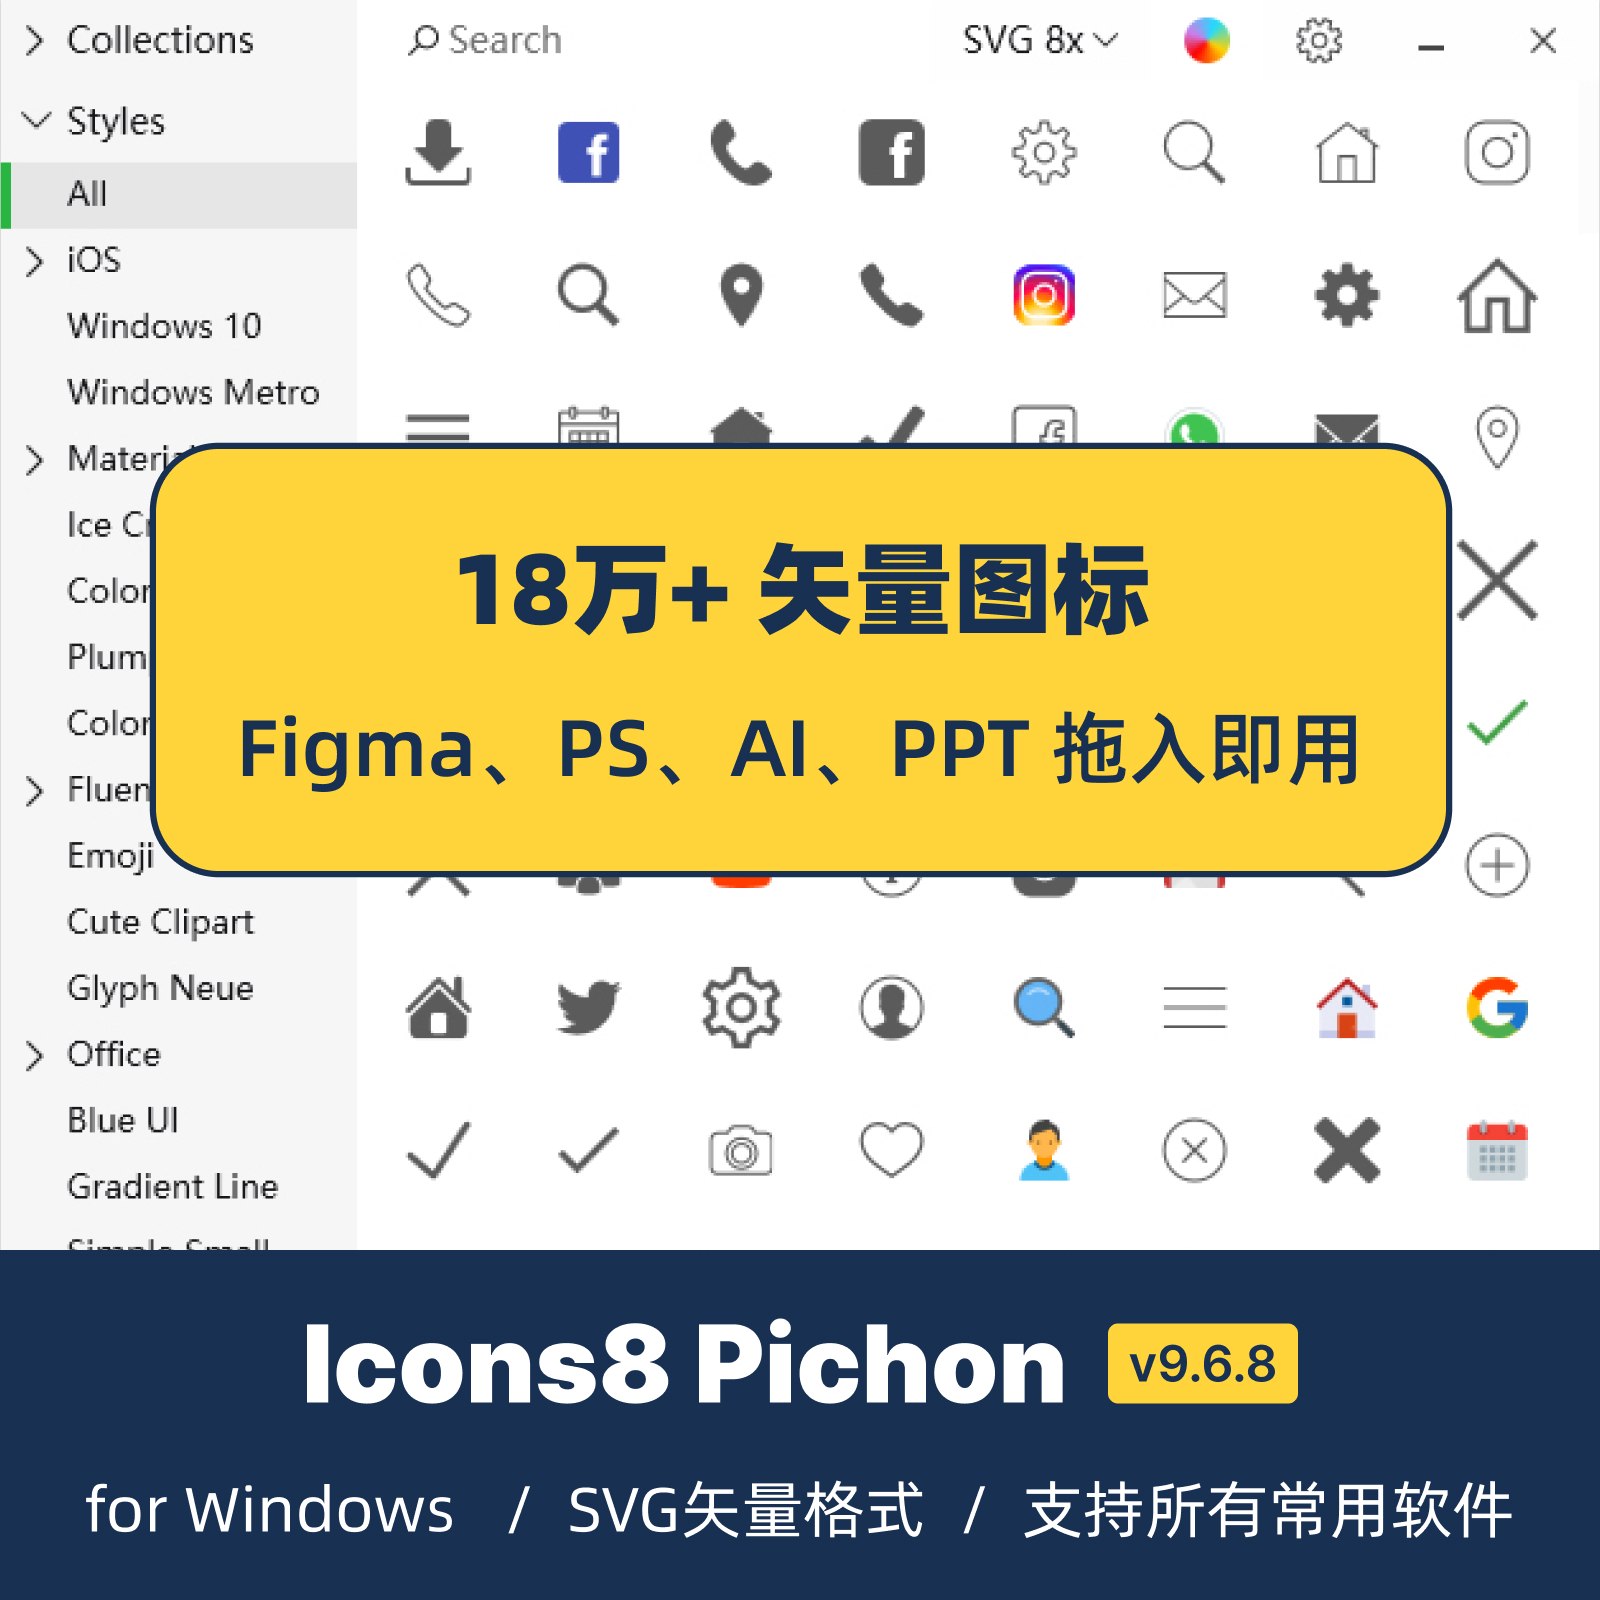 Icons8 Pichon v9.6 Win版18万矢量图标 Figma PS AI PPT AxureRP